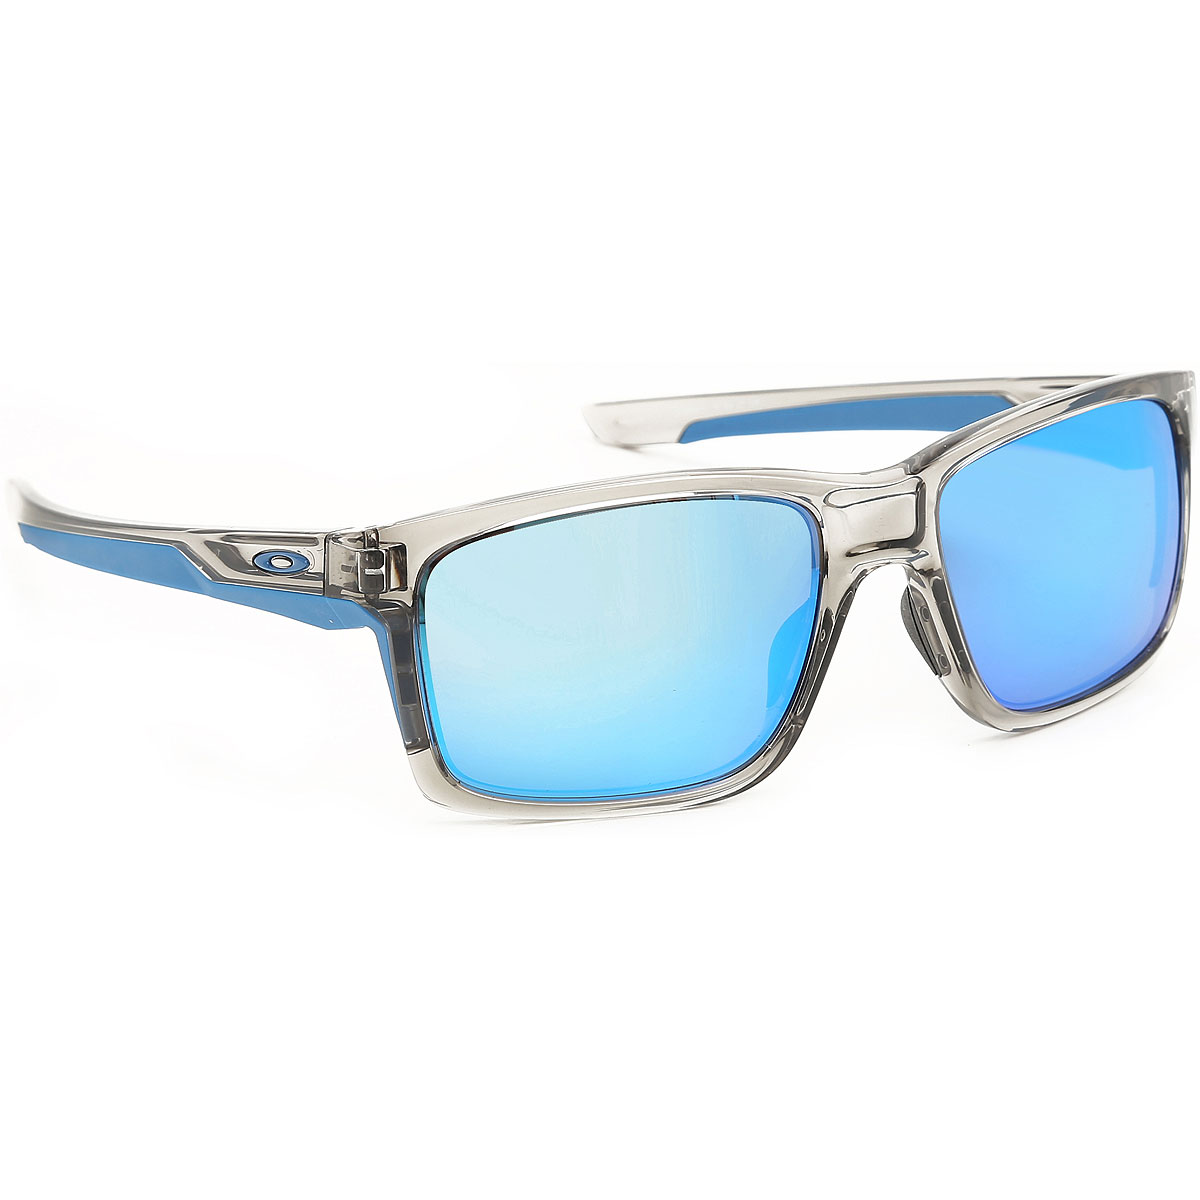 Sunglasses Oakley, Style code: mainlink-oo9264-03